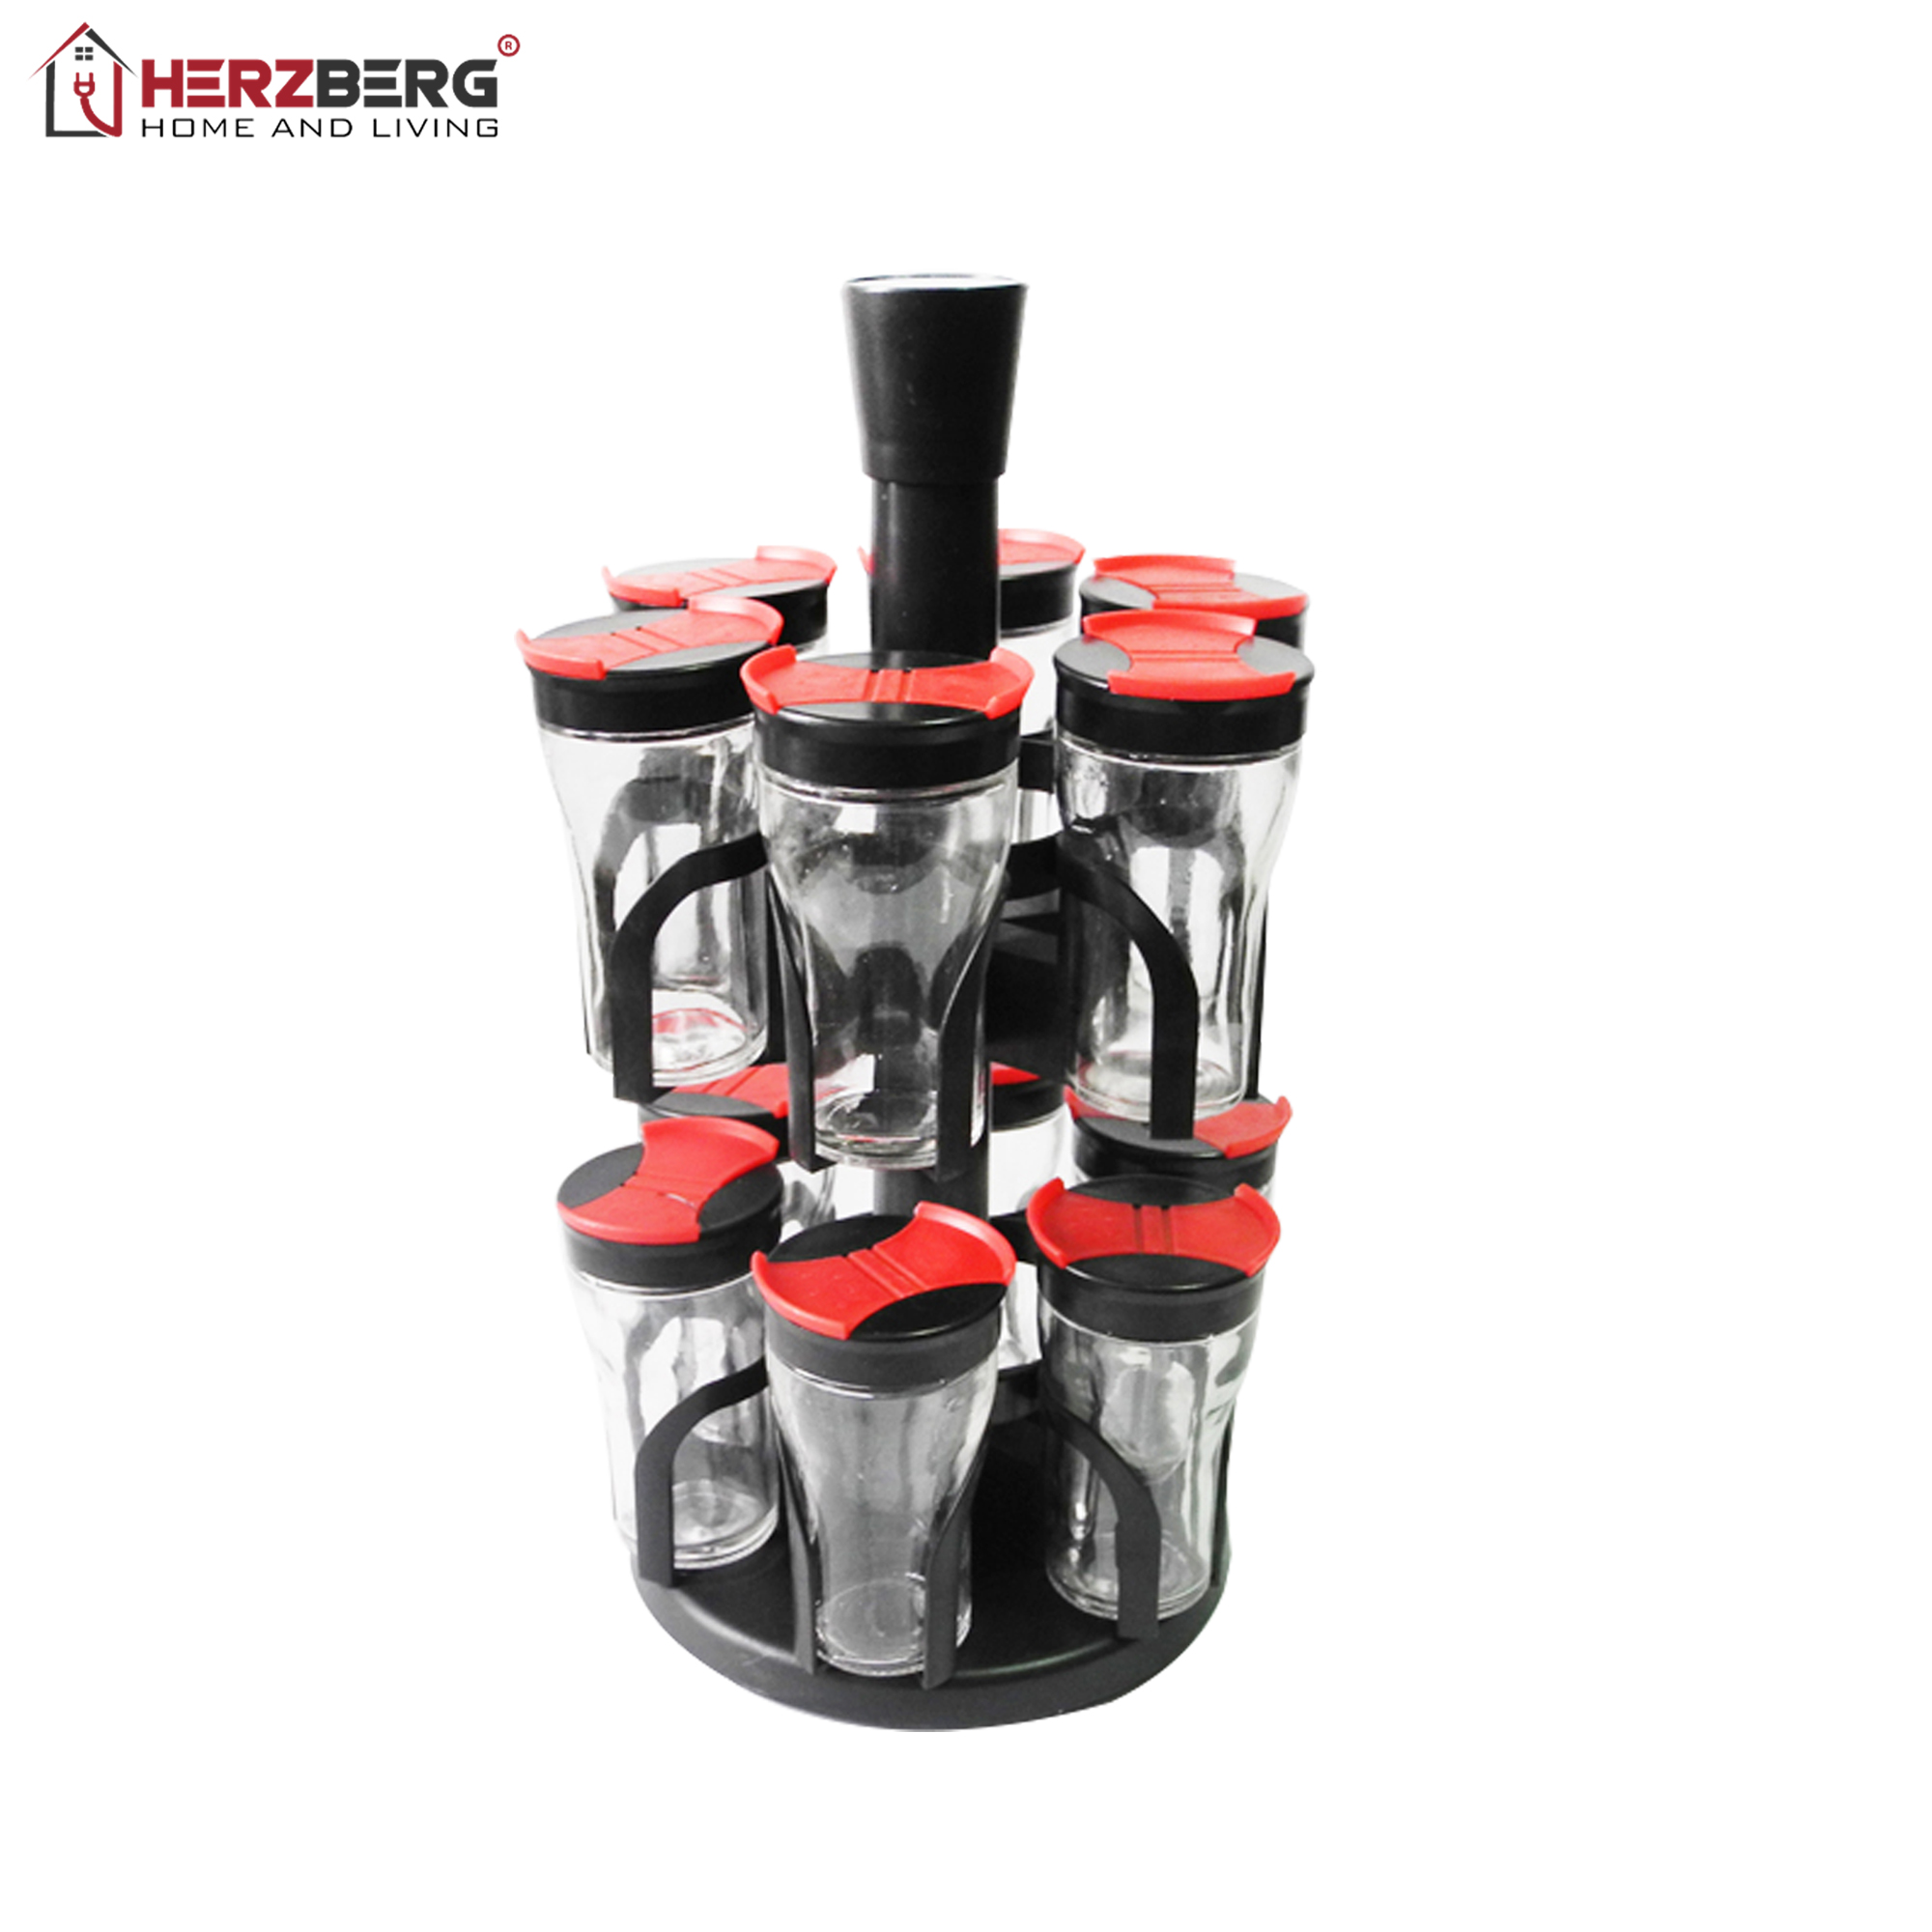 Herzberg Spice Rack with 12 Glass Jar Set